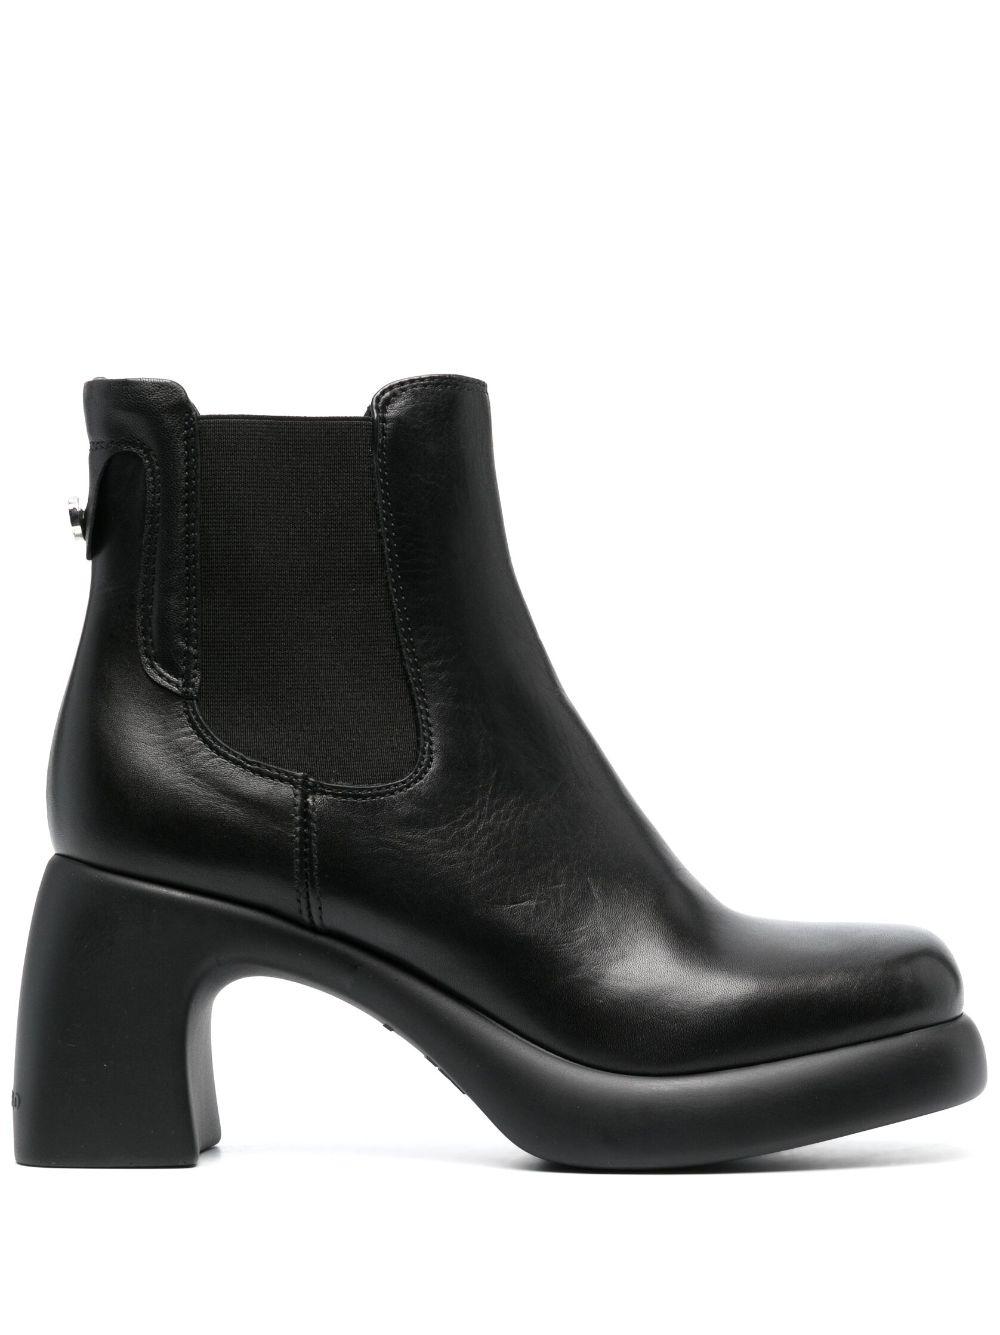 Karl Lagerfeld 80mm Astragon Patent-finish Boots in Black | Lyst Australia